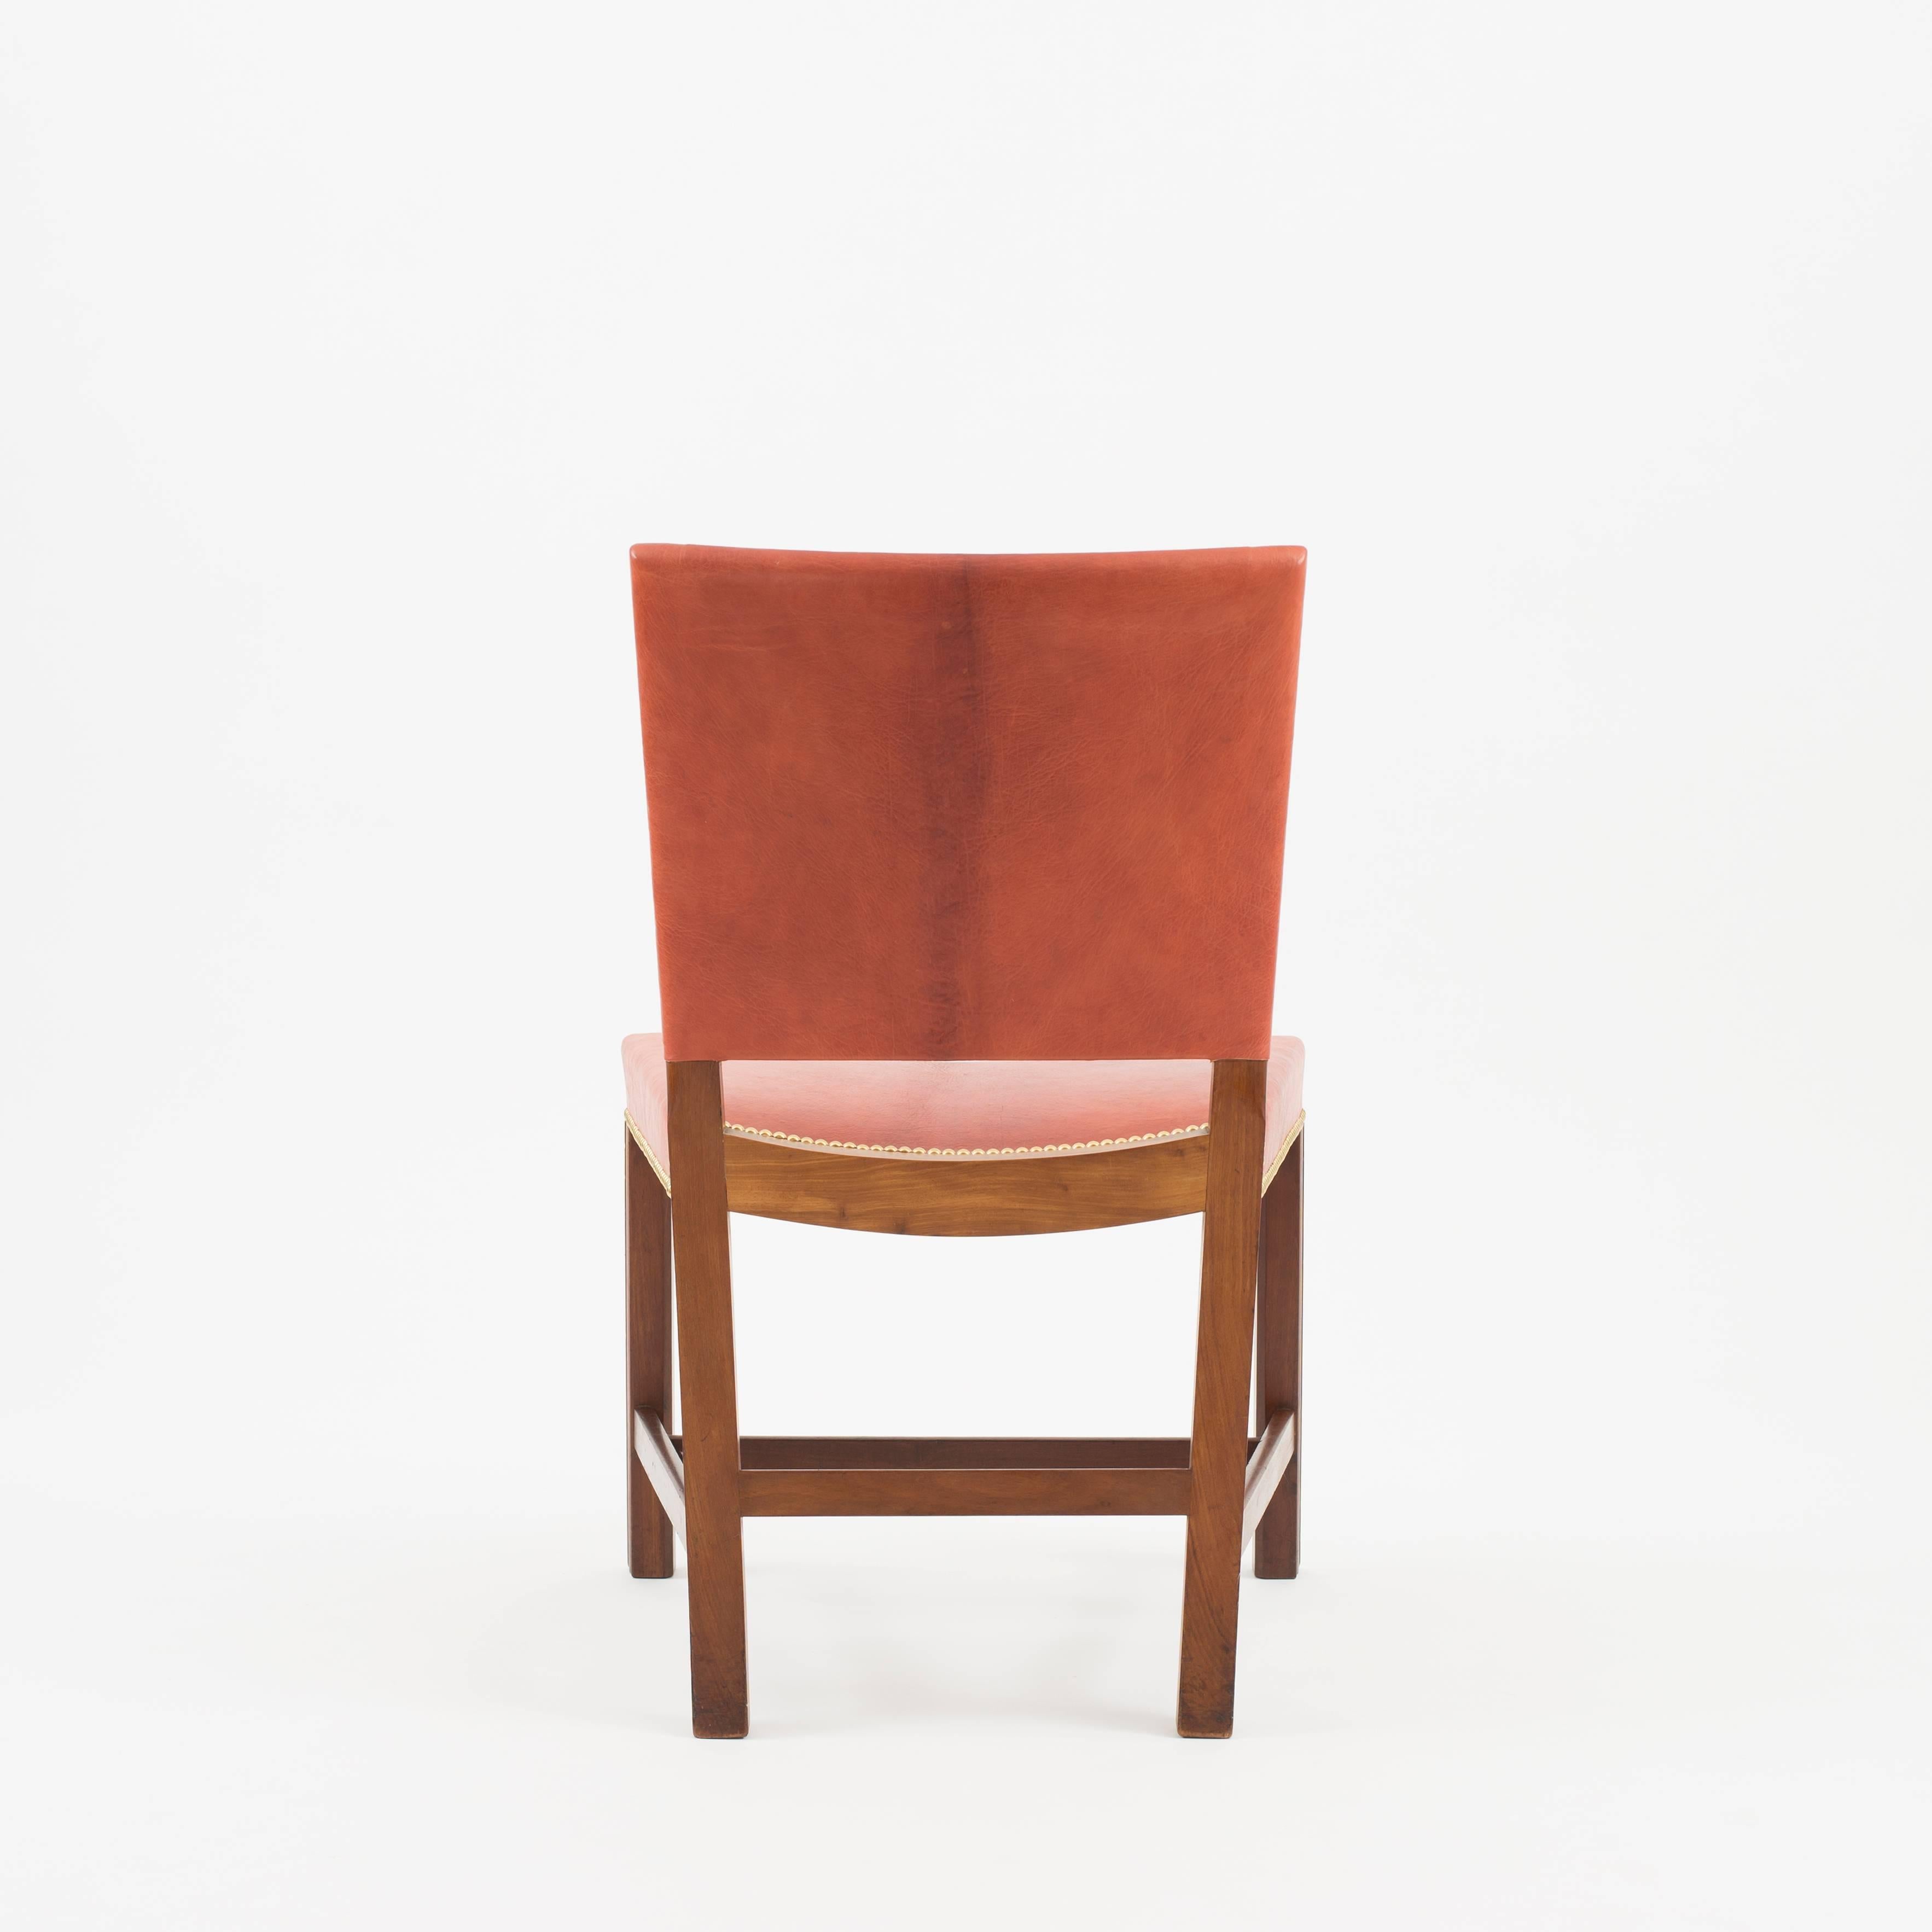 Kaare Klint Roter Stuhl, Rud. Rasmussen, 1930er Jahre (Skandinavische Moderne) im Angebot